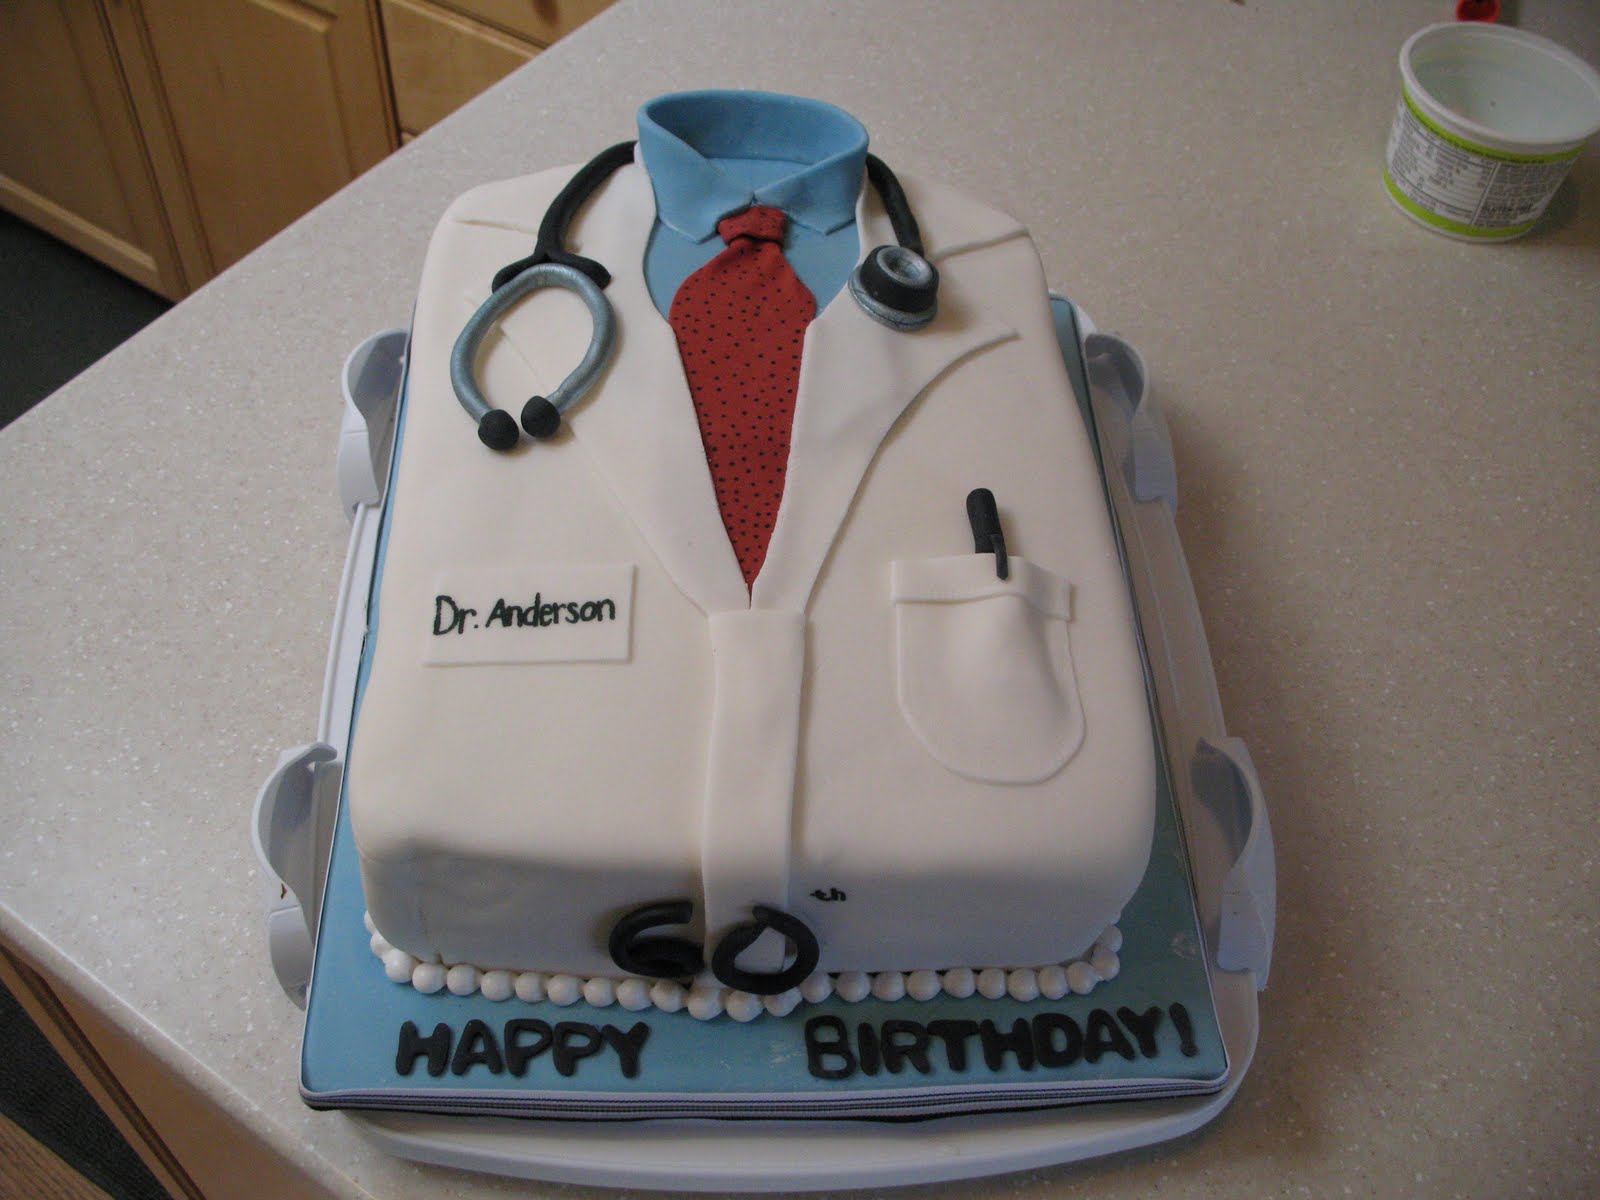 Cake Doctor